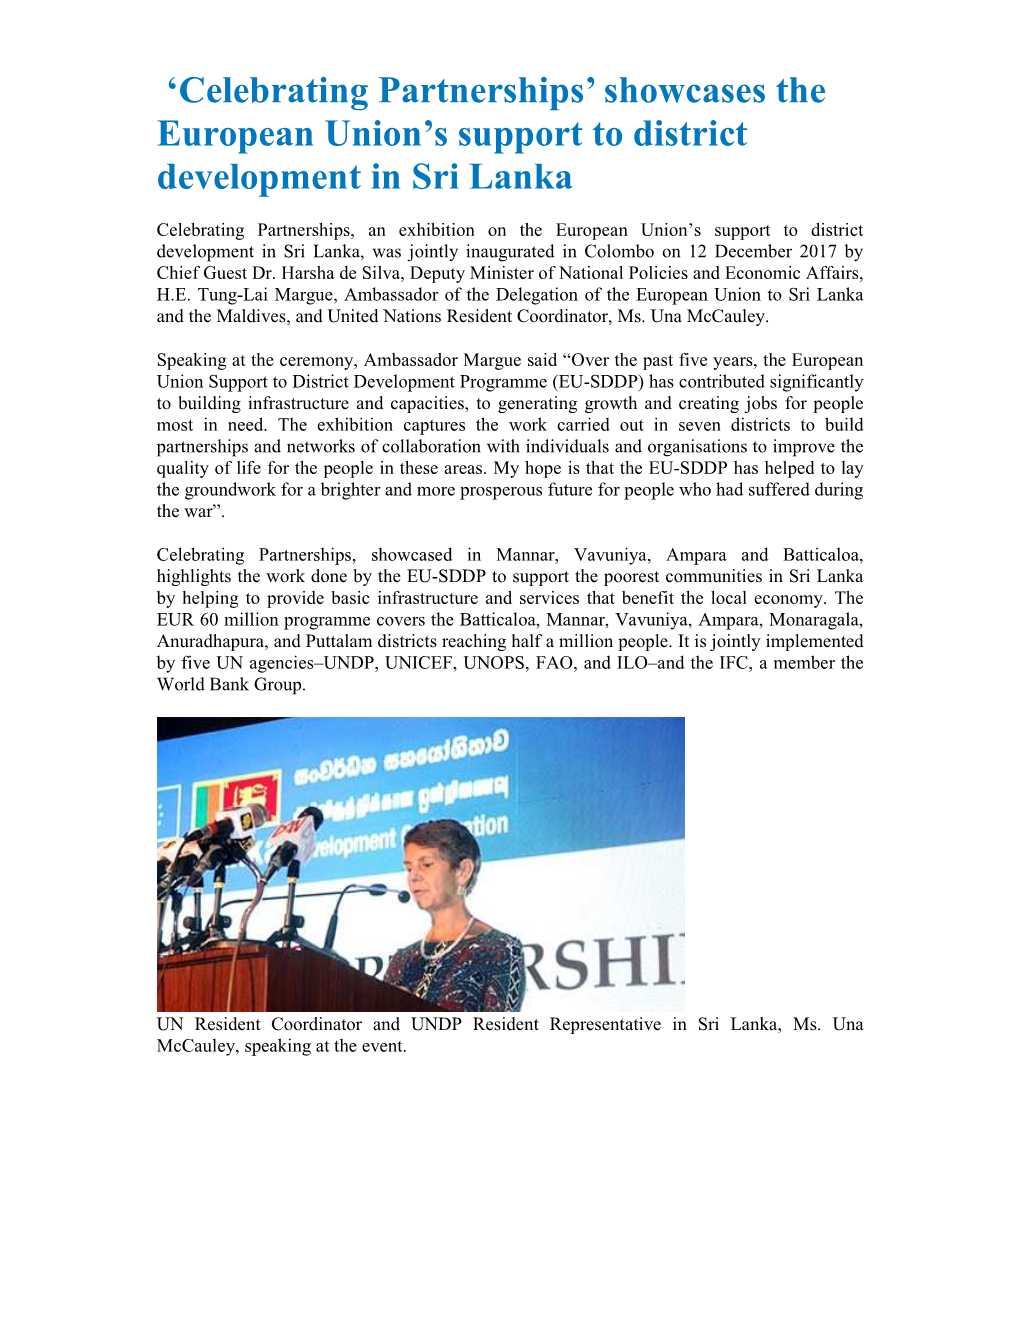 Celebrating Partnerships’ Showcases the European Union’S Support to District Development in Sri Lanka